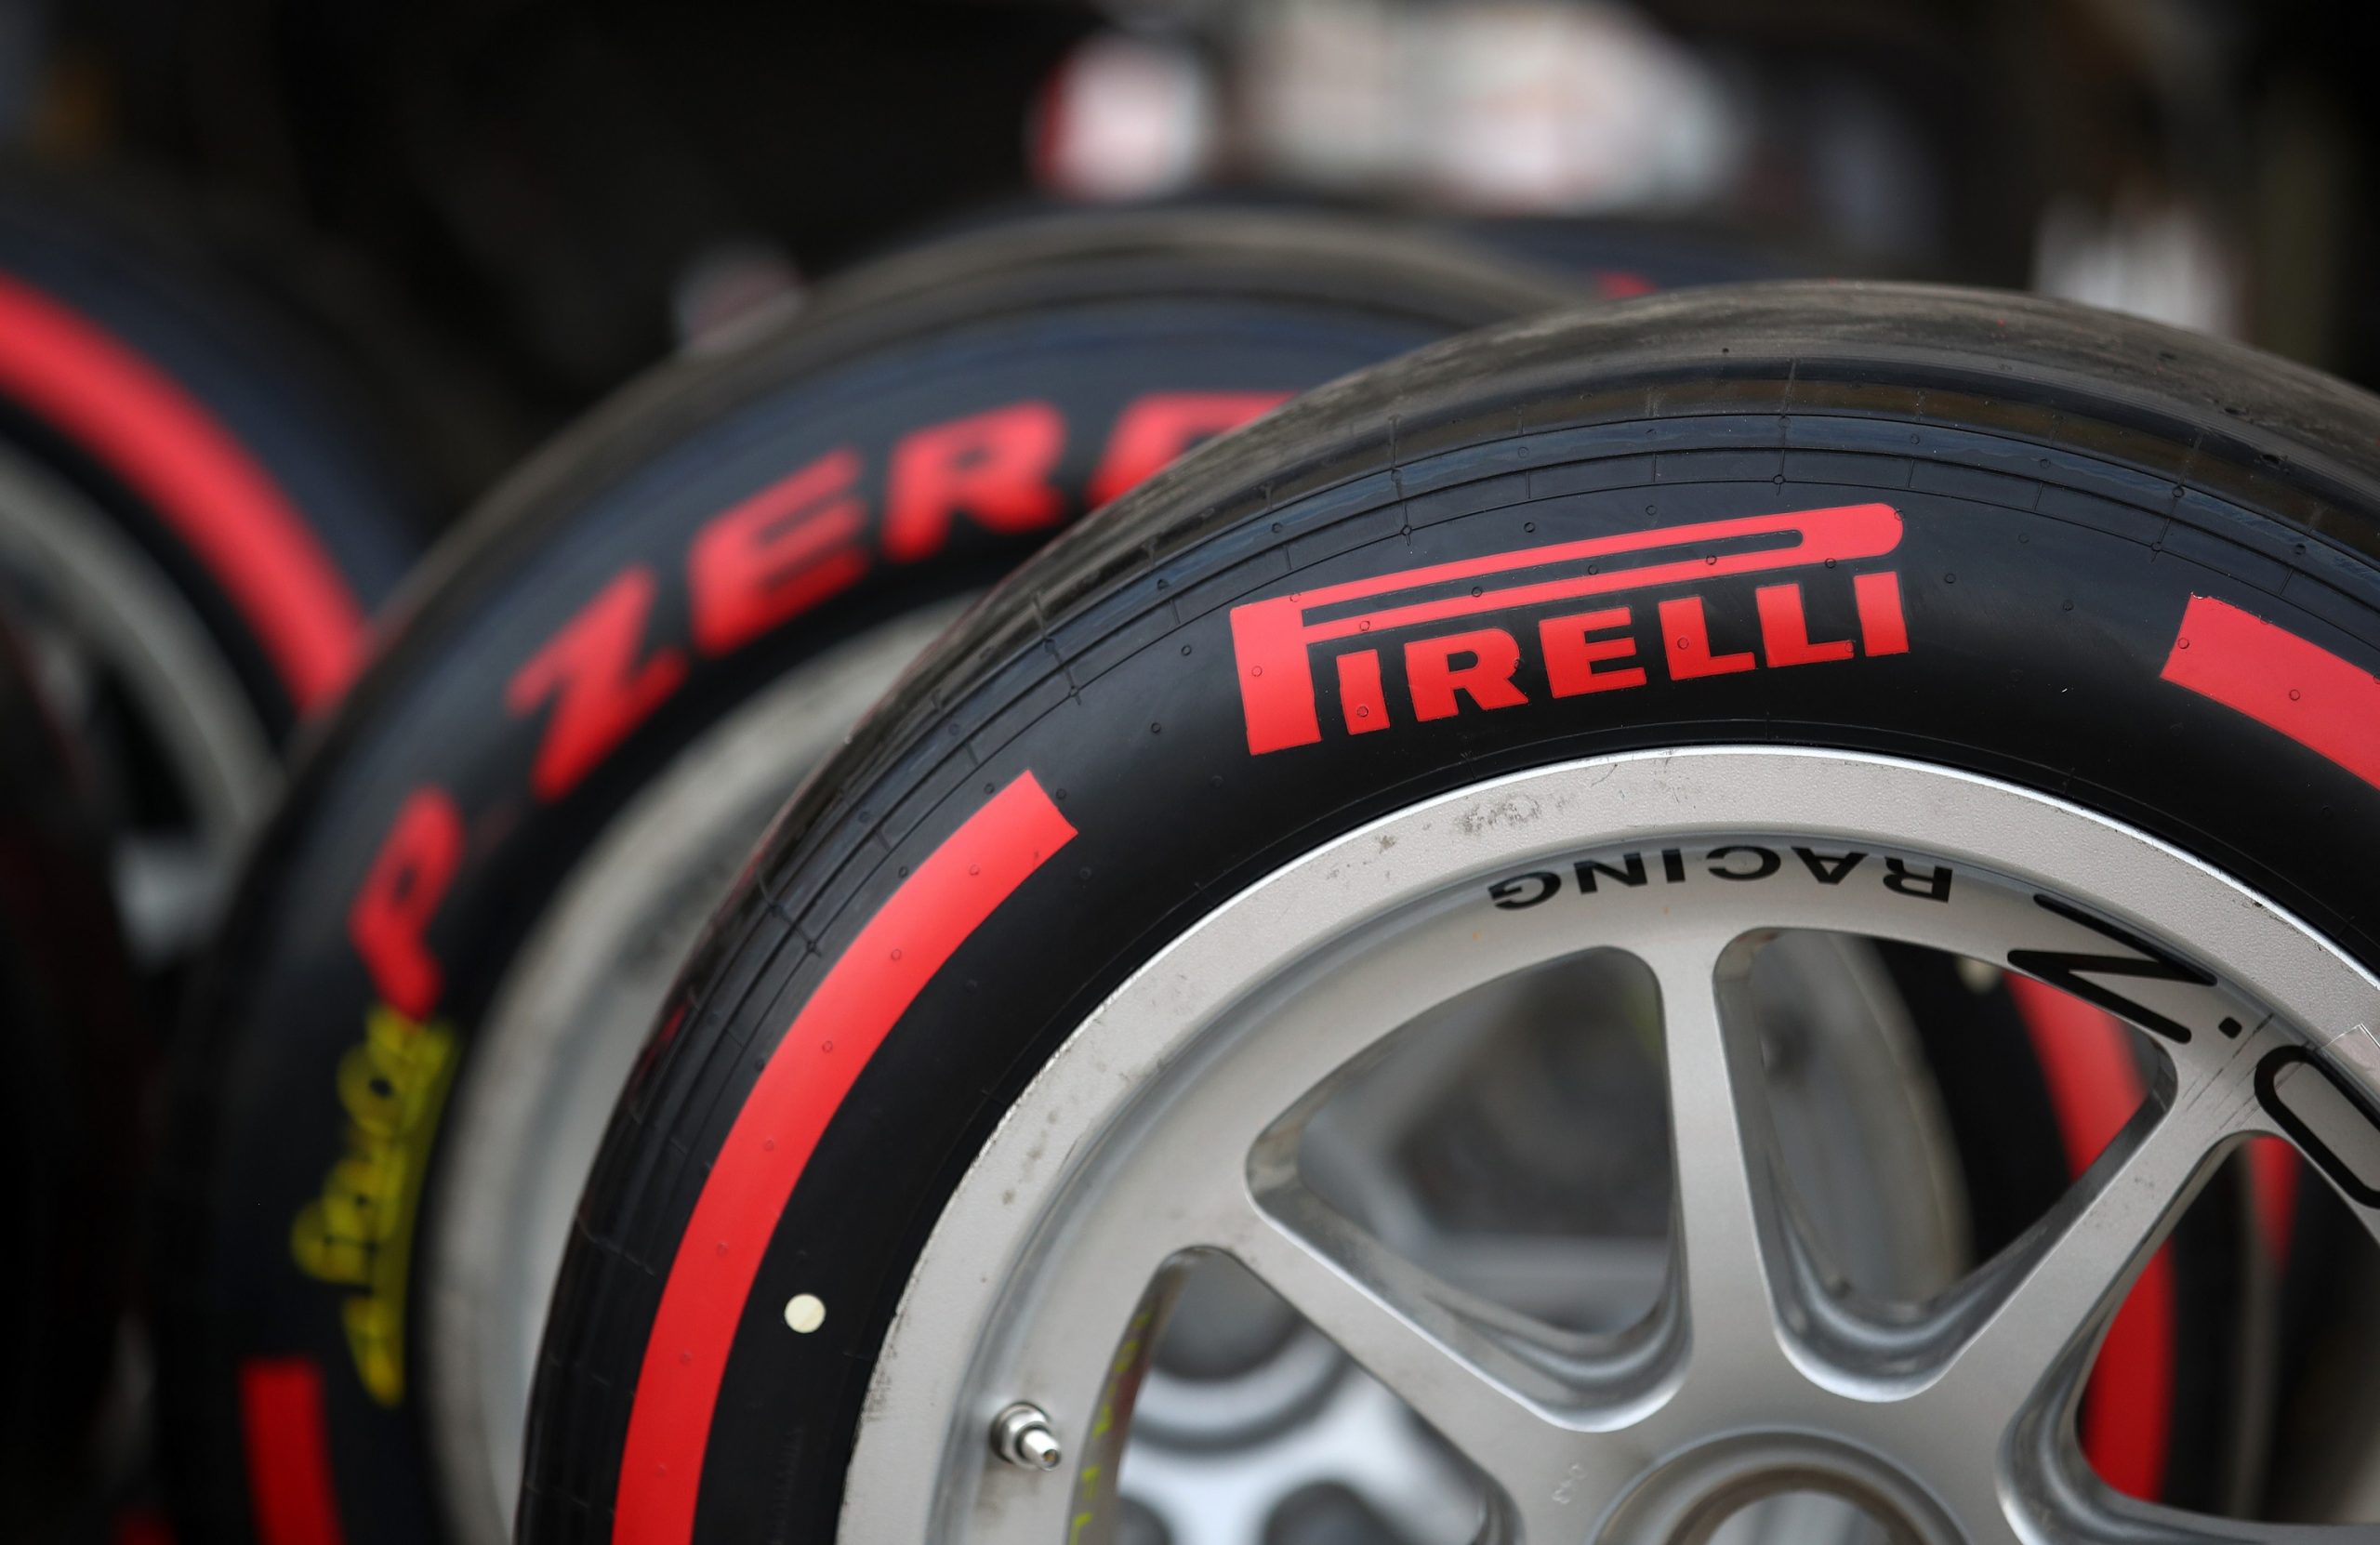 A set of Pirelli-shod O.Z wheels at a Formula 1 race